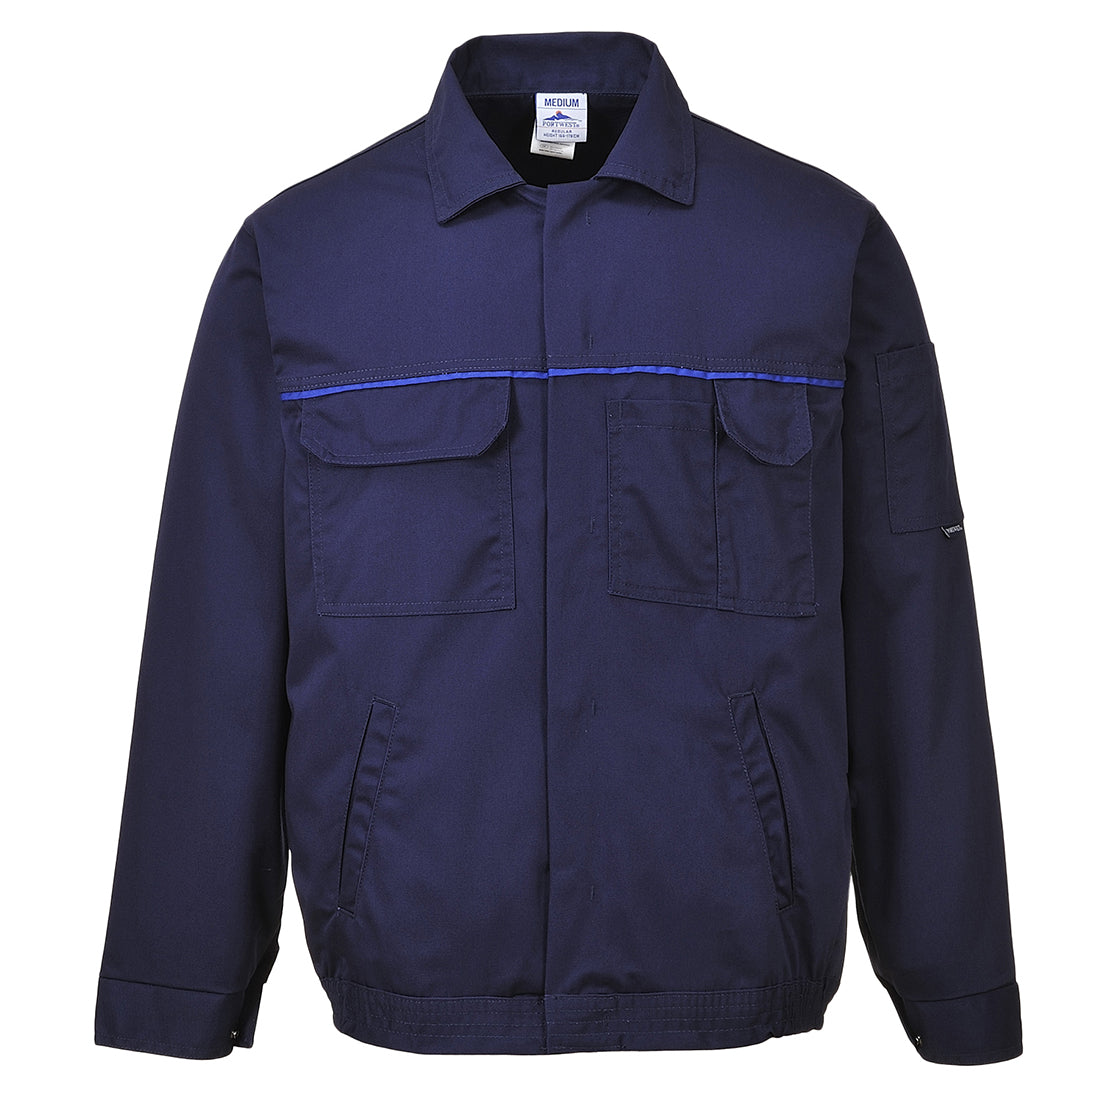 Portwest 2860 - Navy Classic Work Jacket Coat sz Small Regular